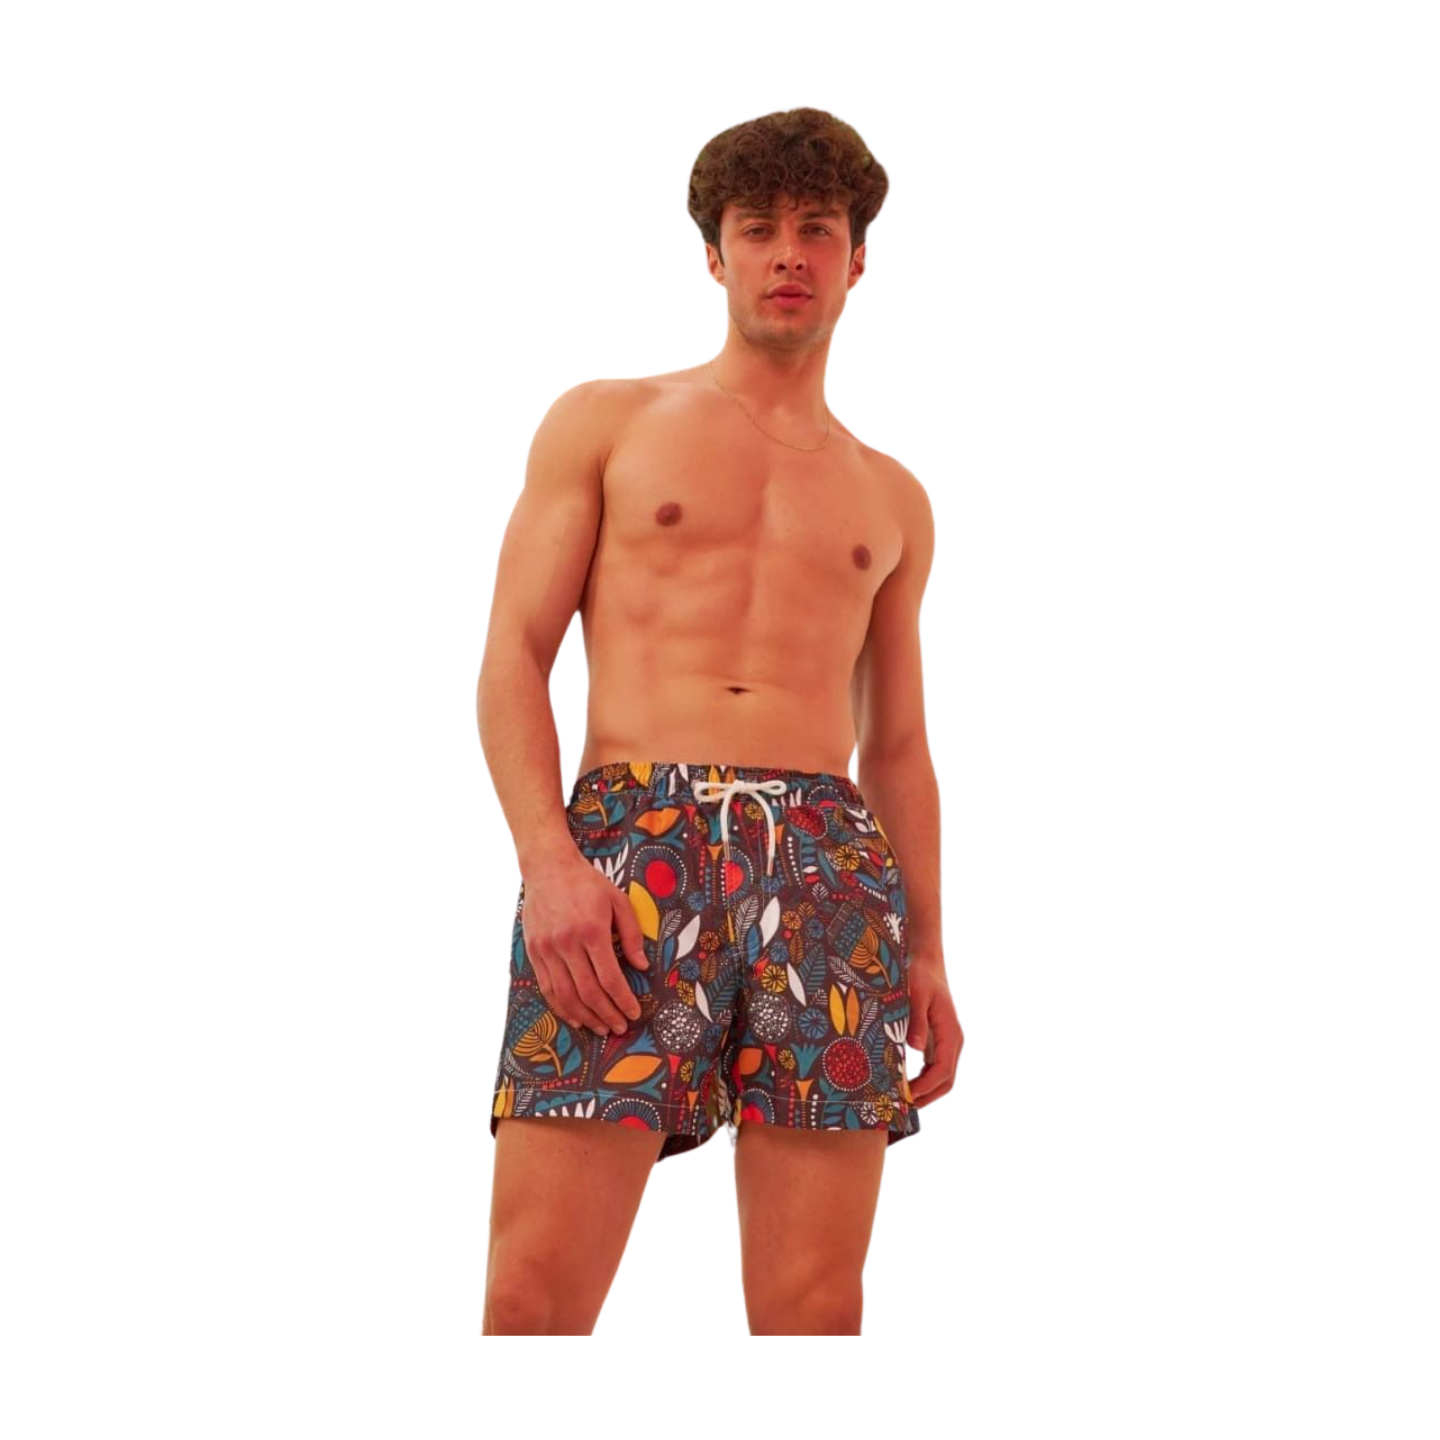 Men's Vibrant Colors Swim Trunks - Bold and Bright Beachwear for a Stylish Splash